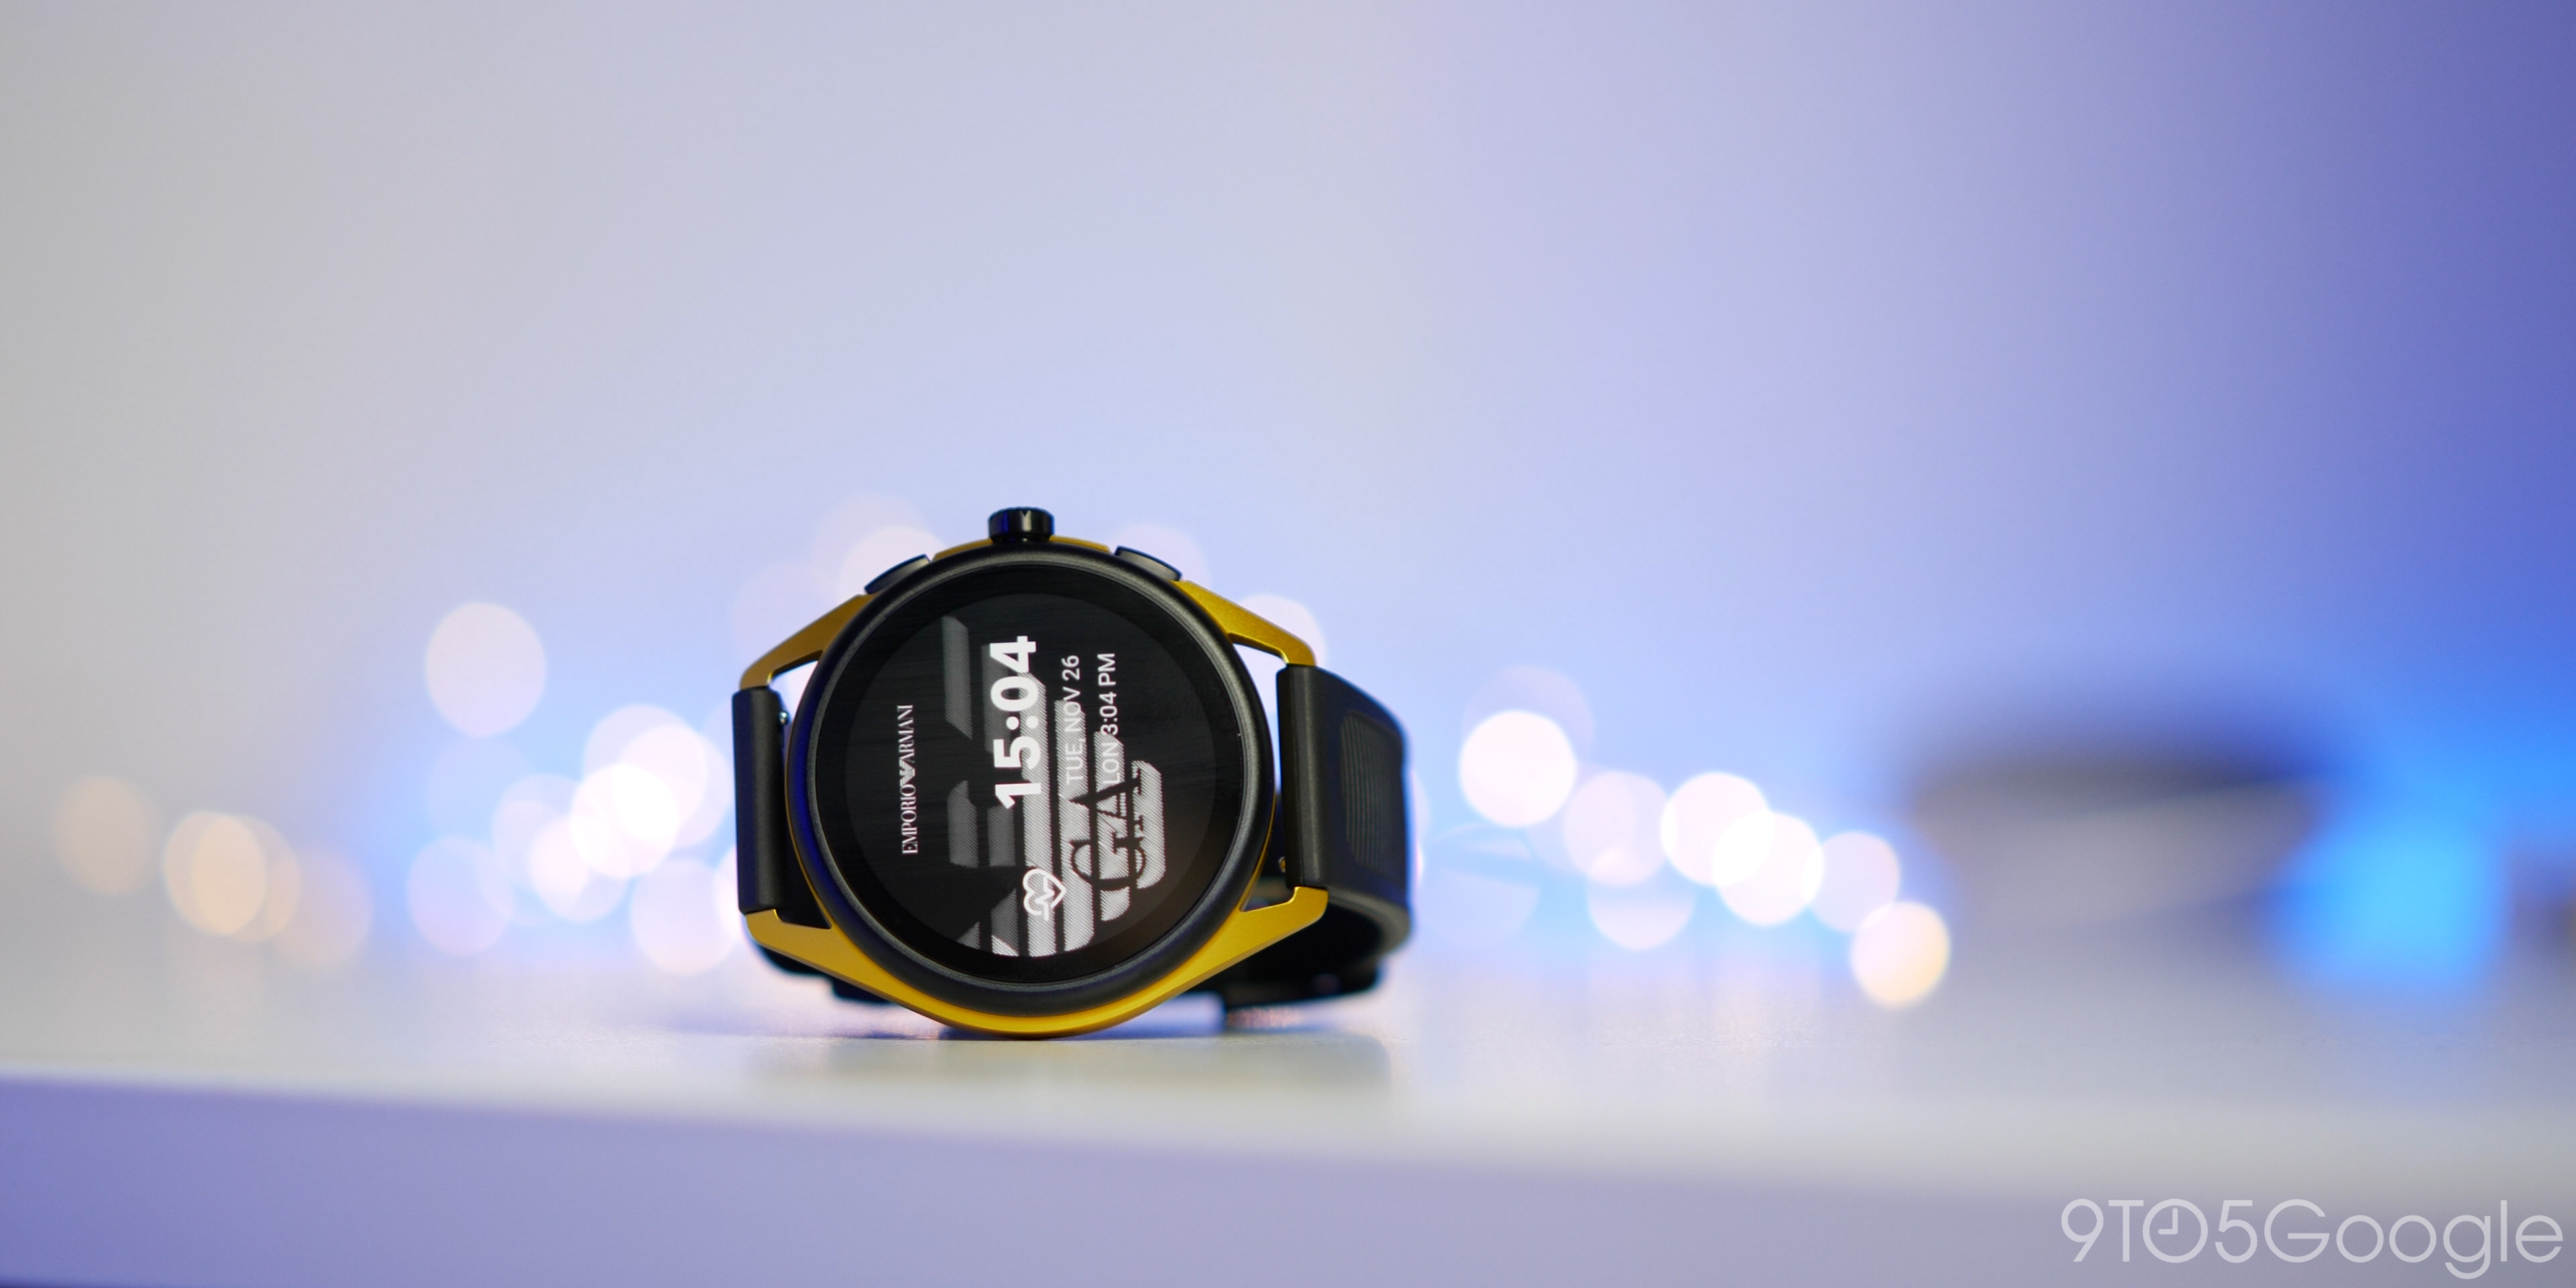 Emporio Armani Smartwatch review [Video] 9to5Google